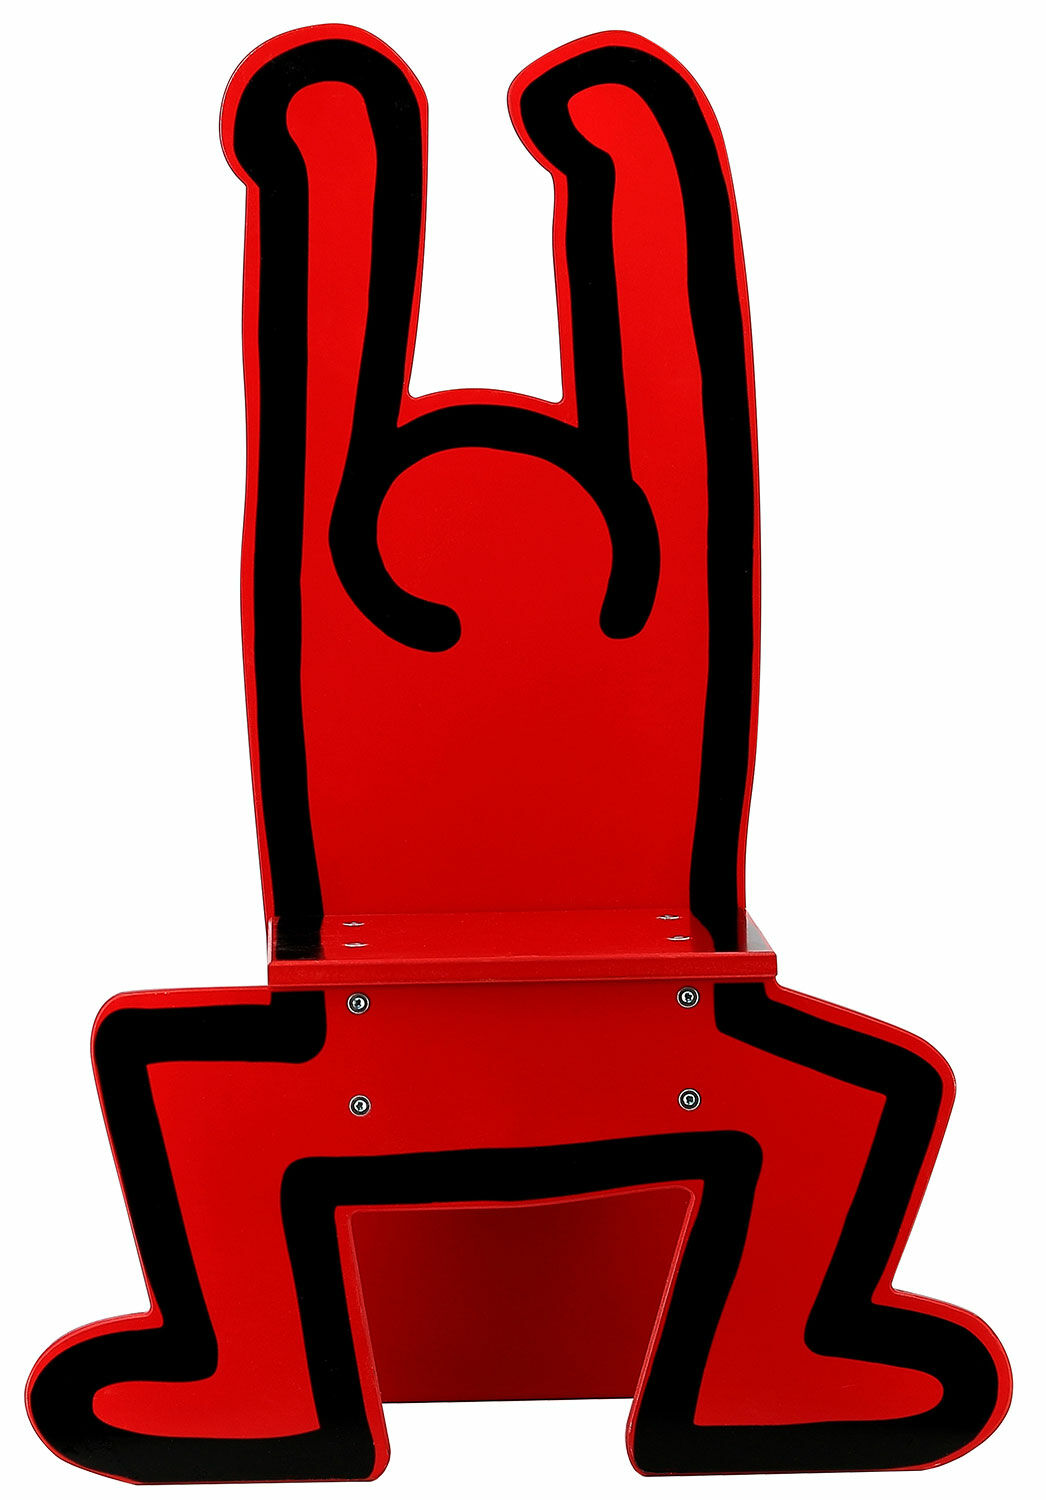 Børnestol "Keith Haring", rød version